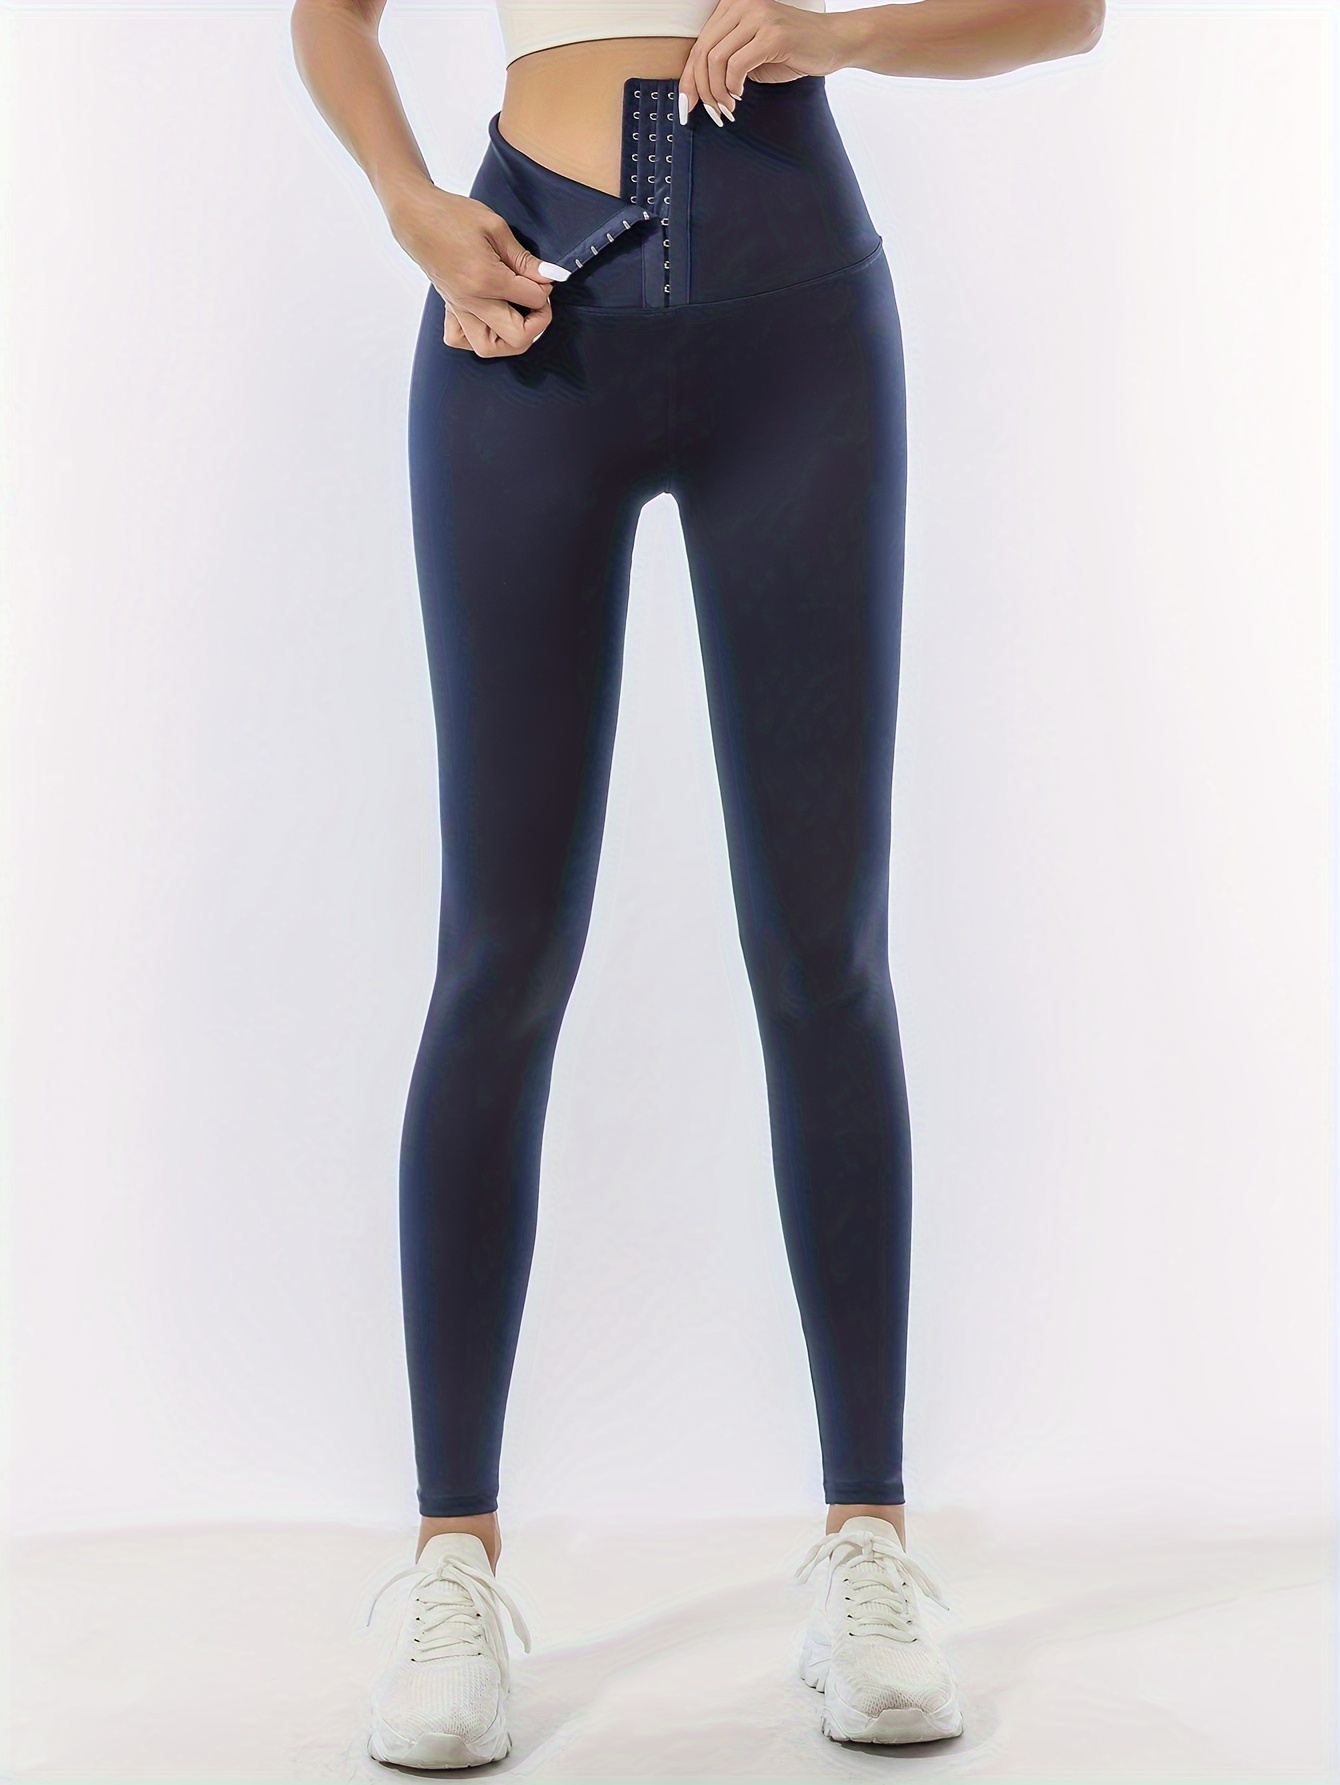 TRASA Active Printed Yoga Pants for Women's Gym High Waist, Tummy Control,  Workout Pants 4 Way Stretch Yoga Leggings - Sky Blue, Size - S : :  Fashion